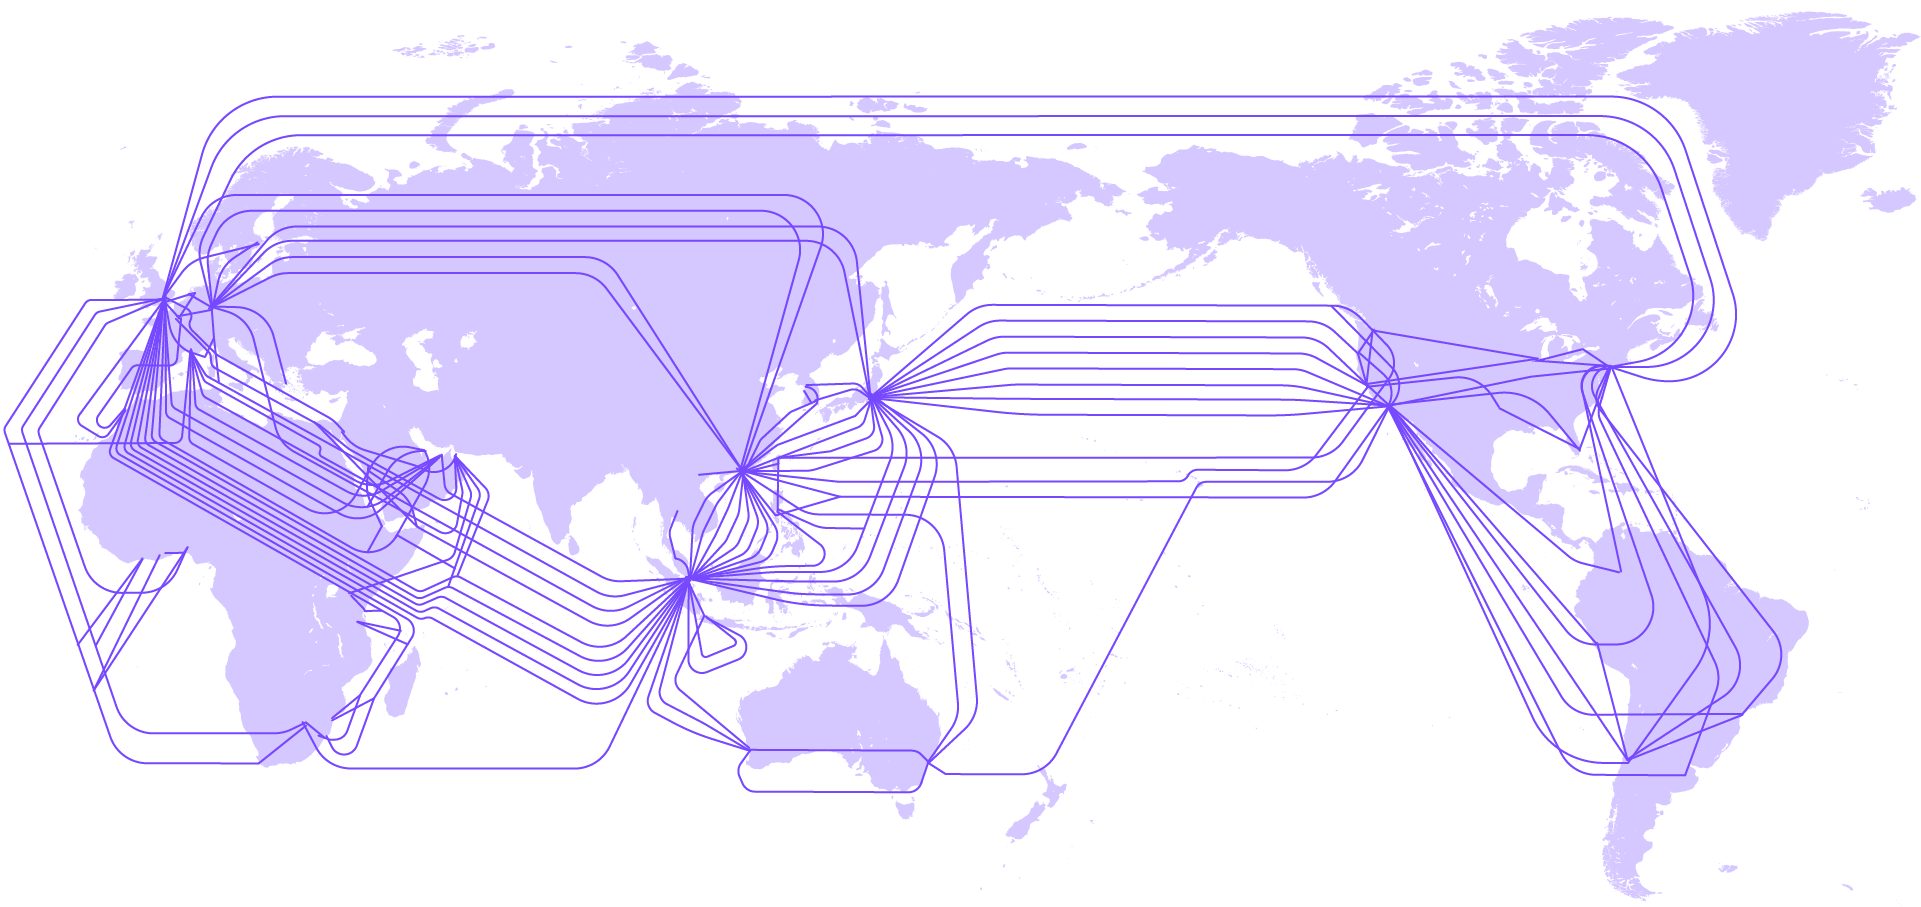 PCCW Global network